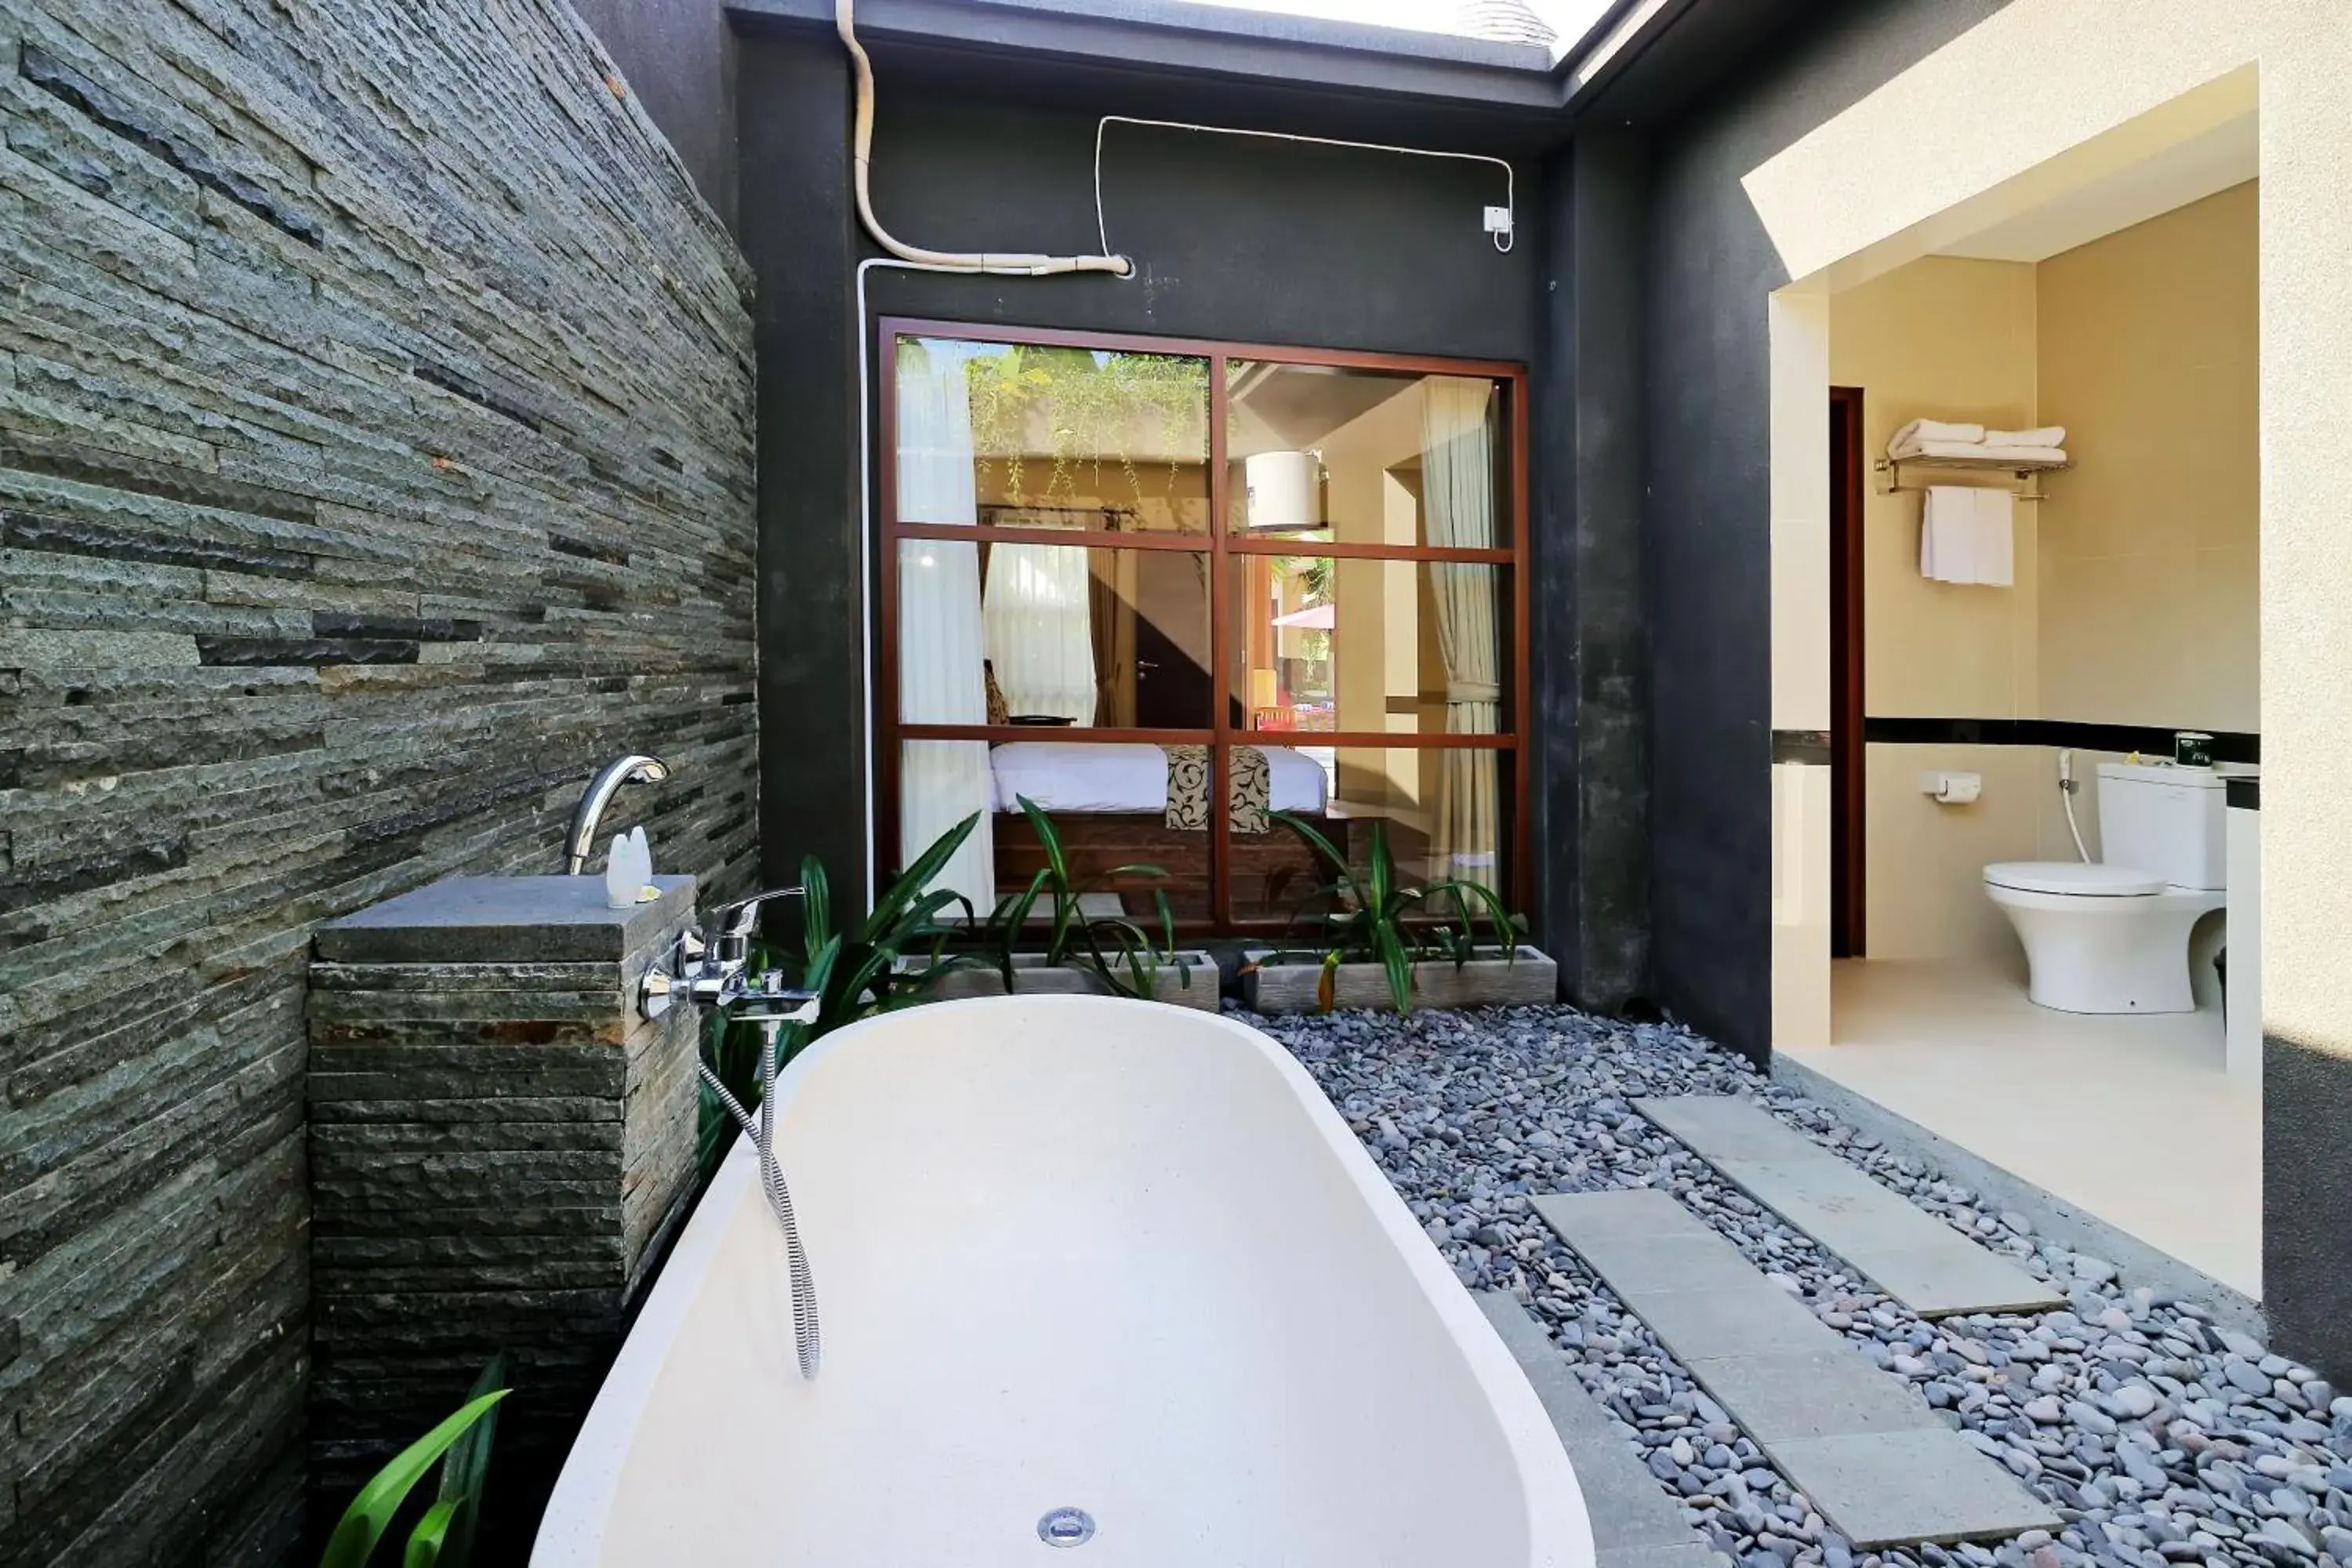 Bathroom in Kadiga Villas Ubud